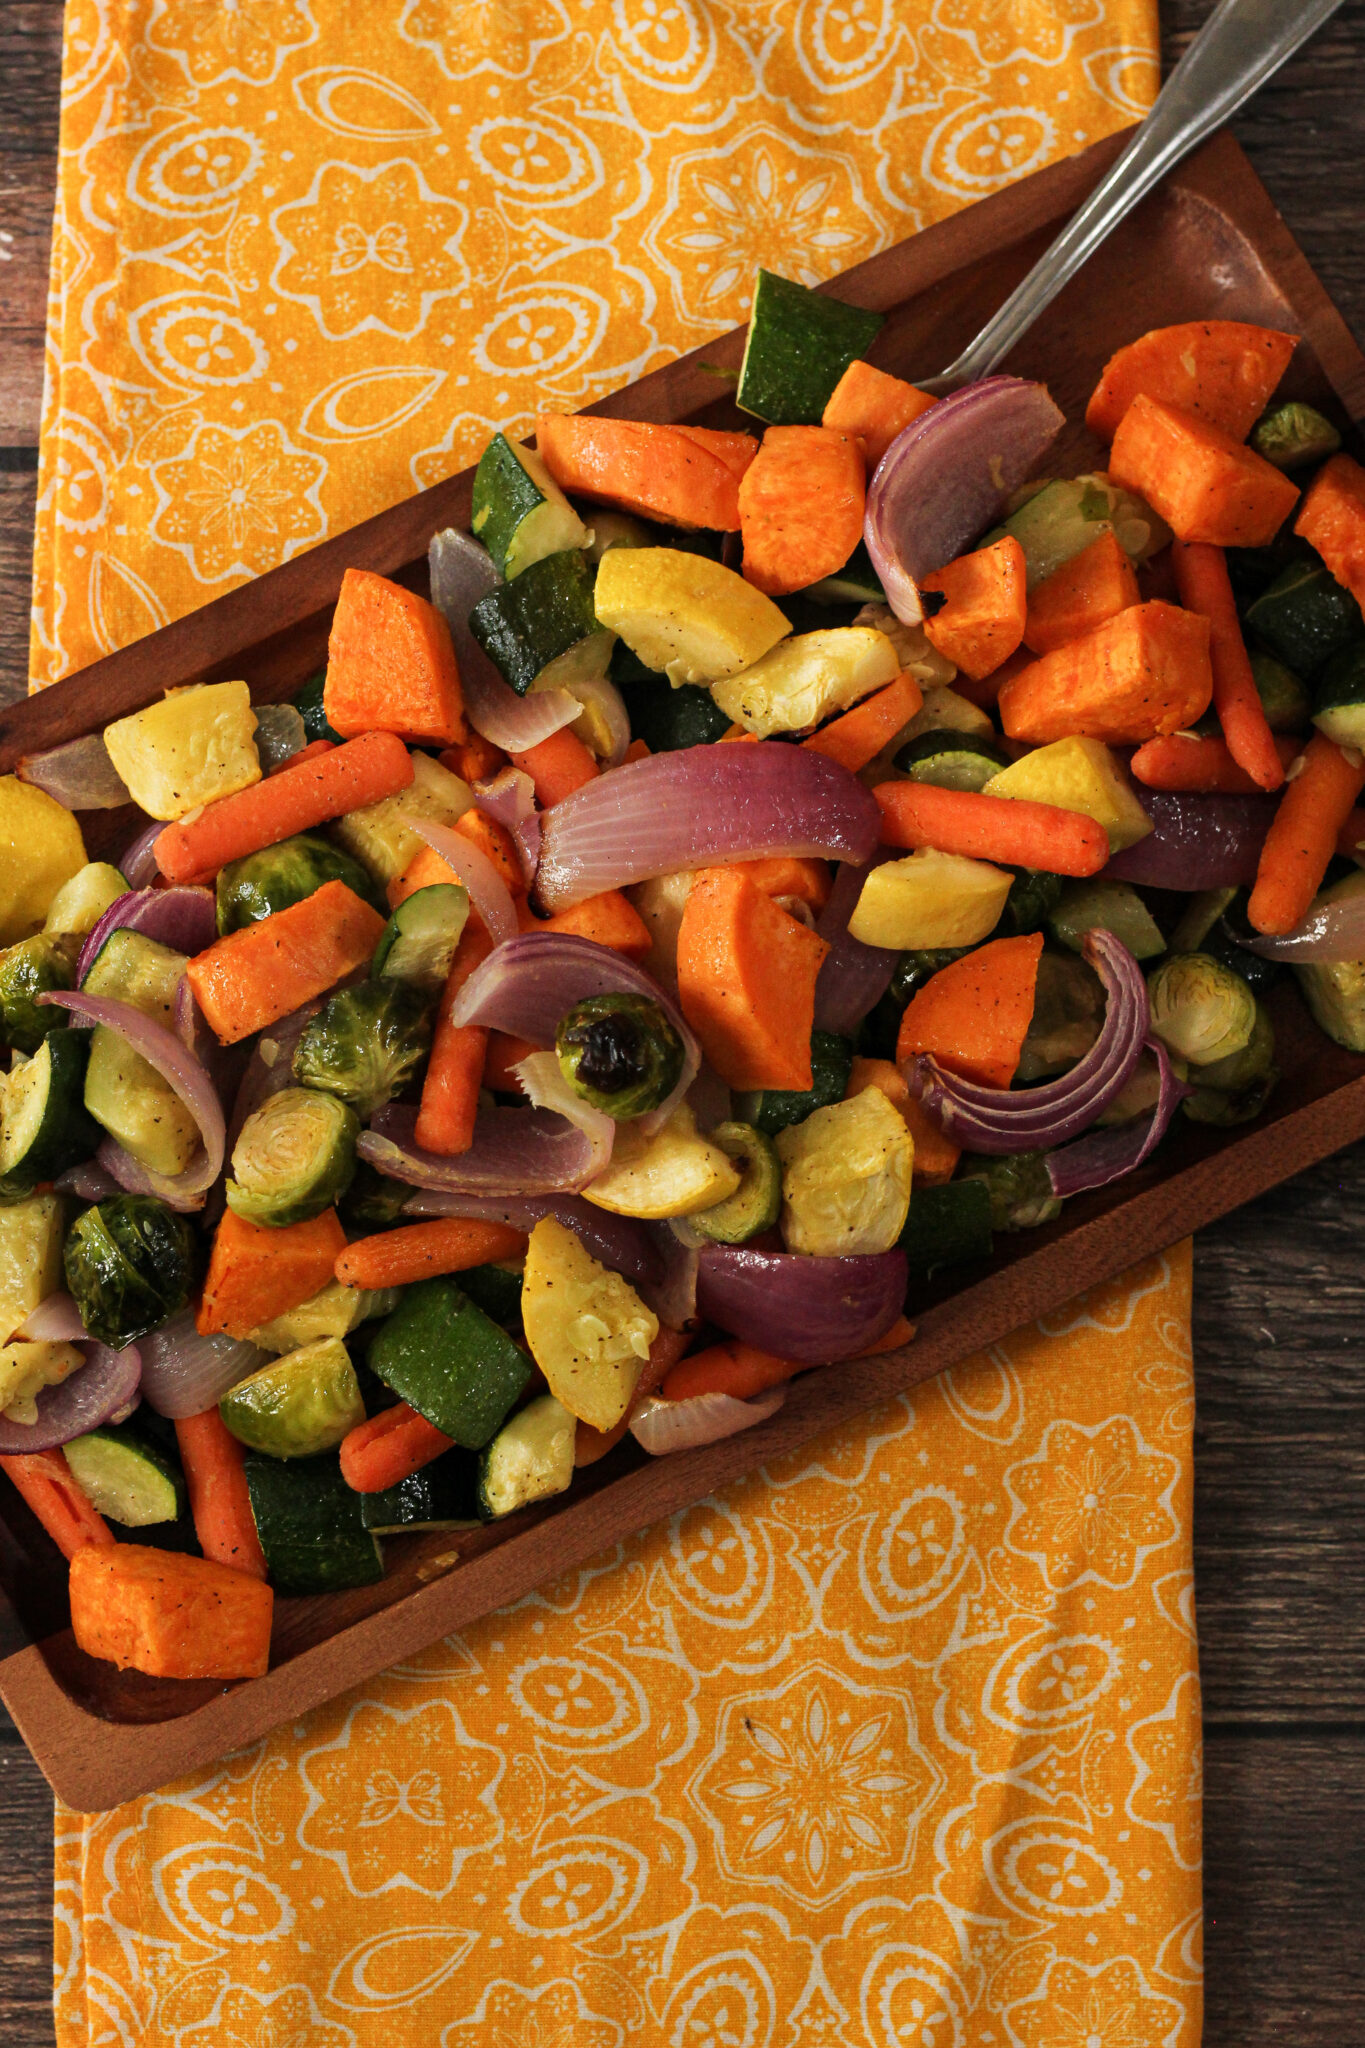 oven roasted vegetables on a wooden platter